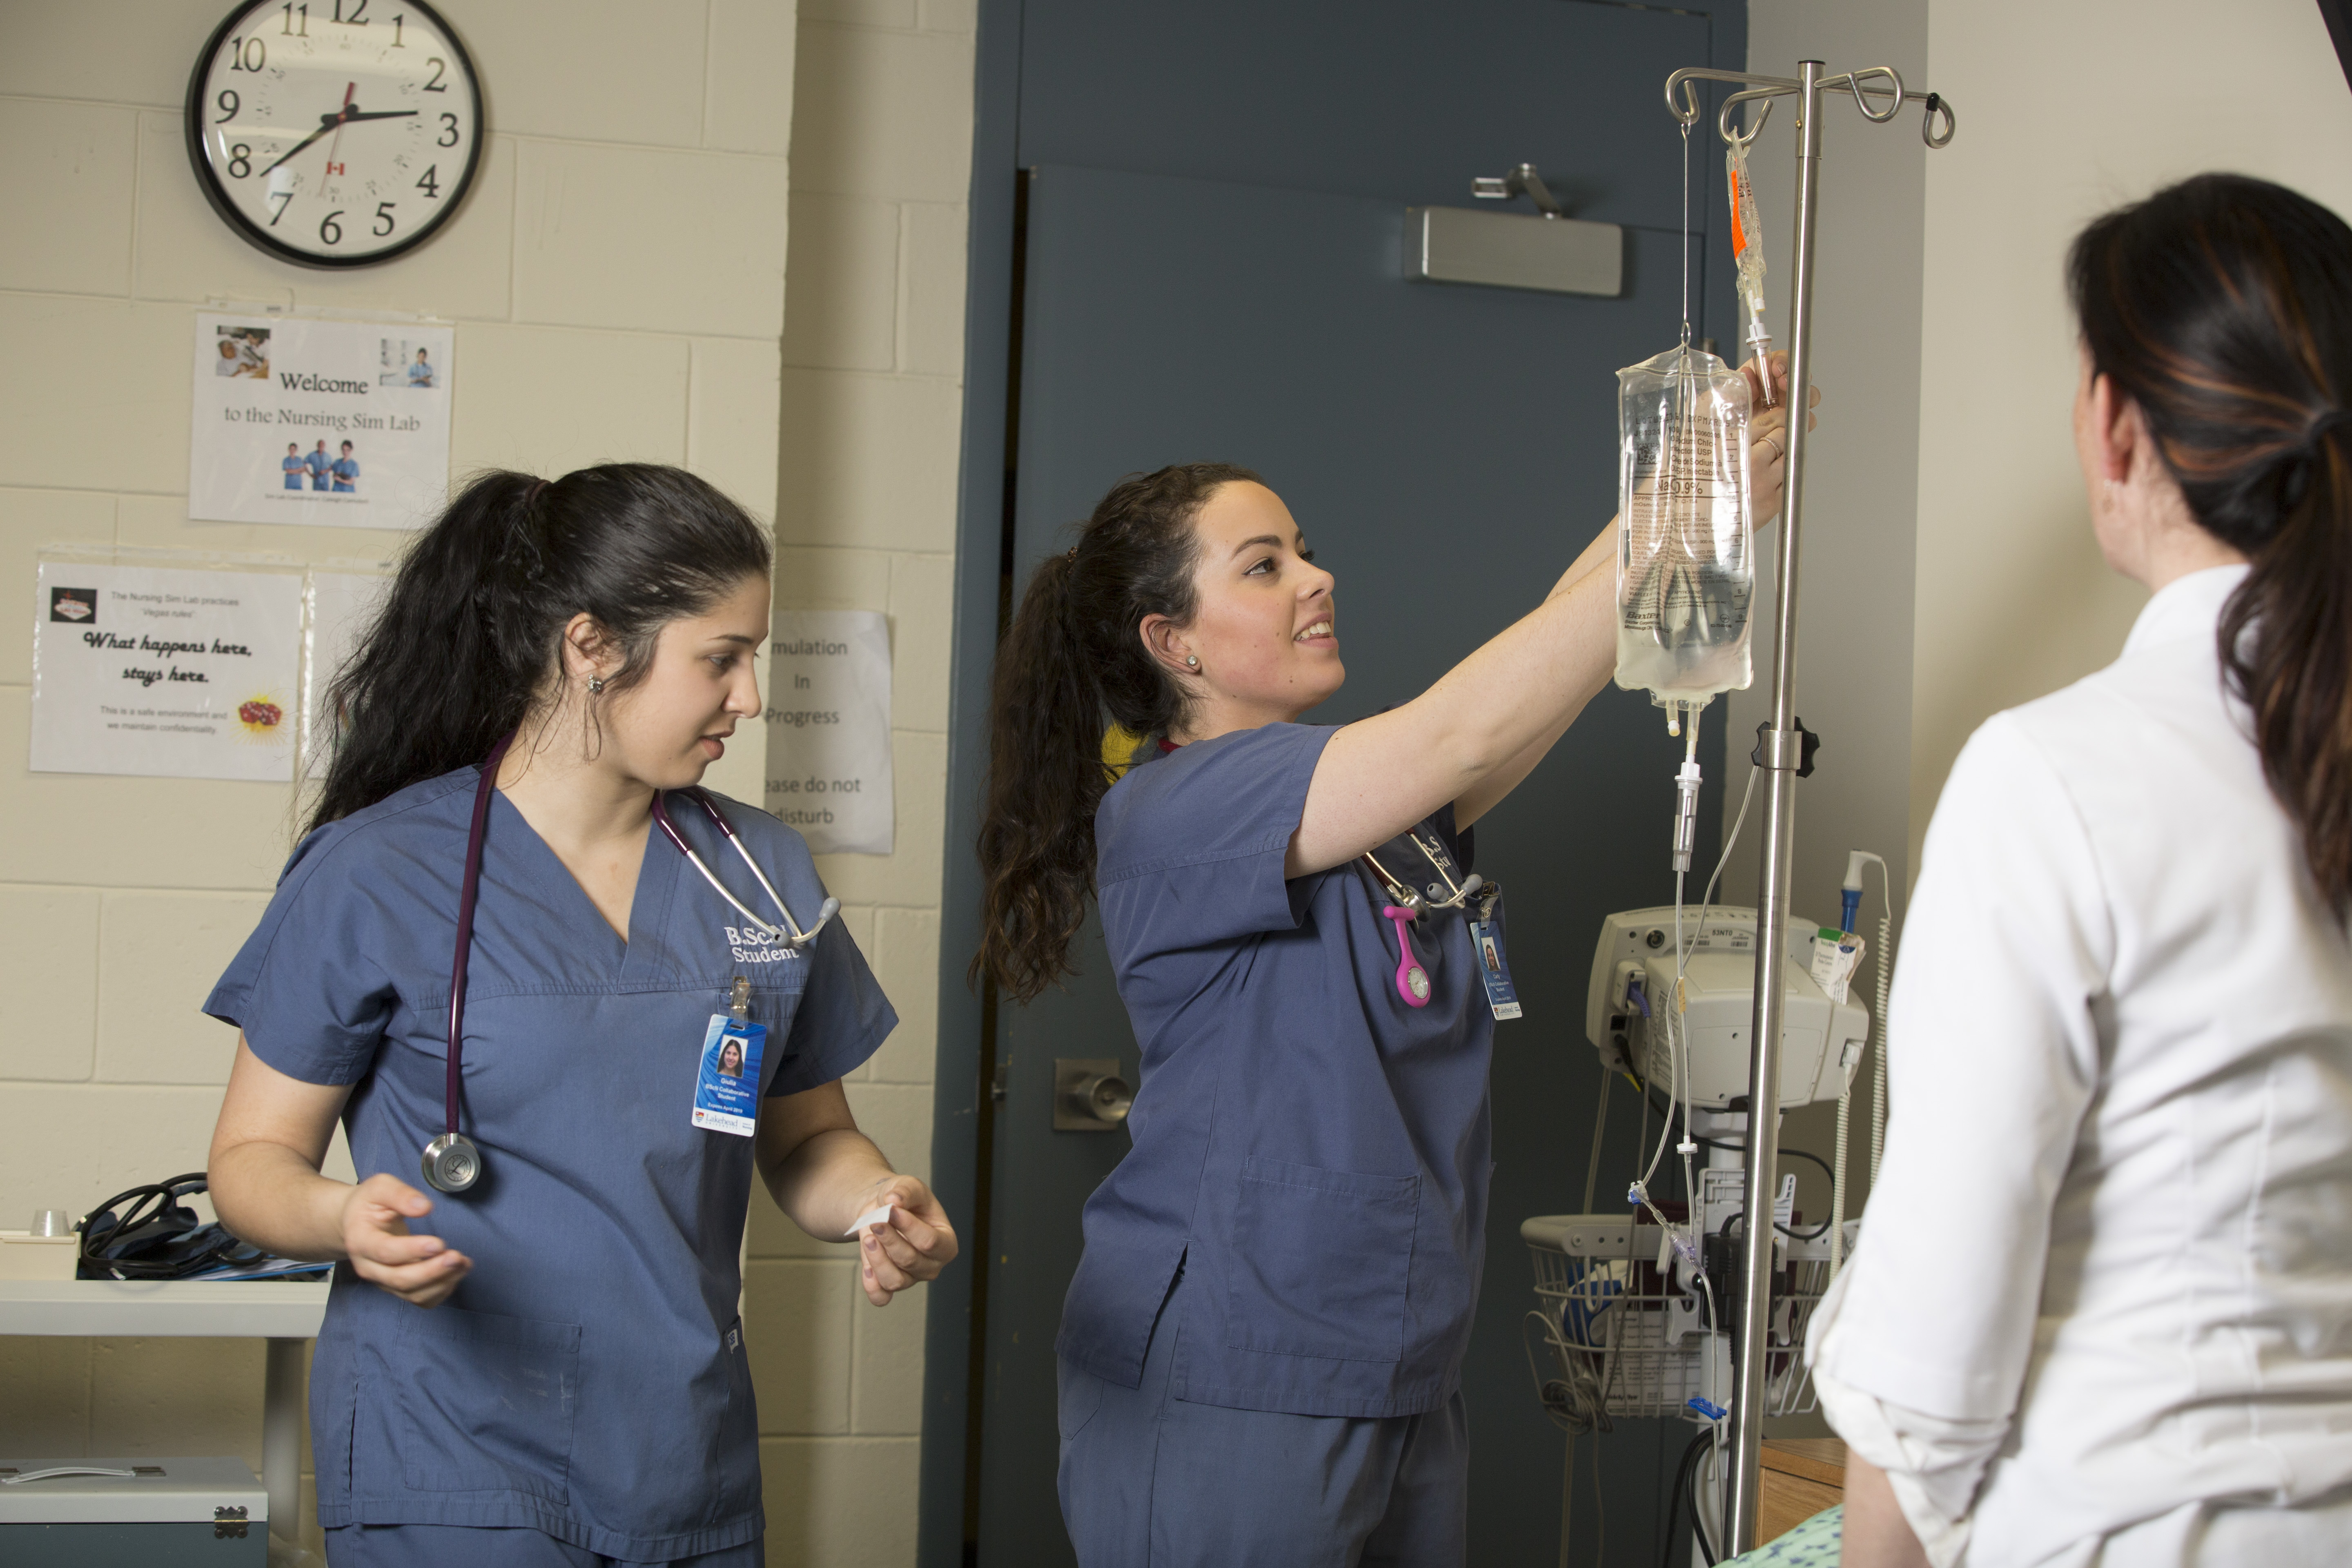 Nursing student adjust IV bag while instructor looks on.